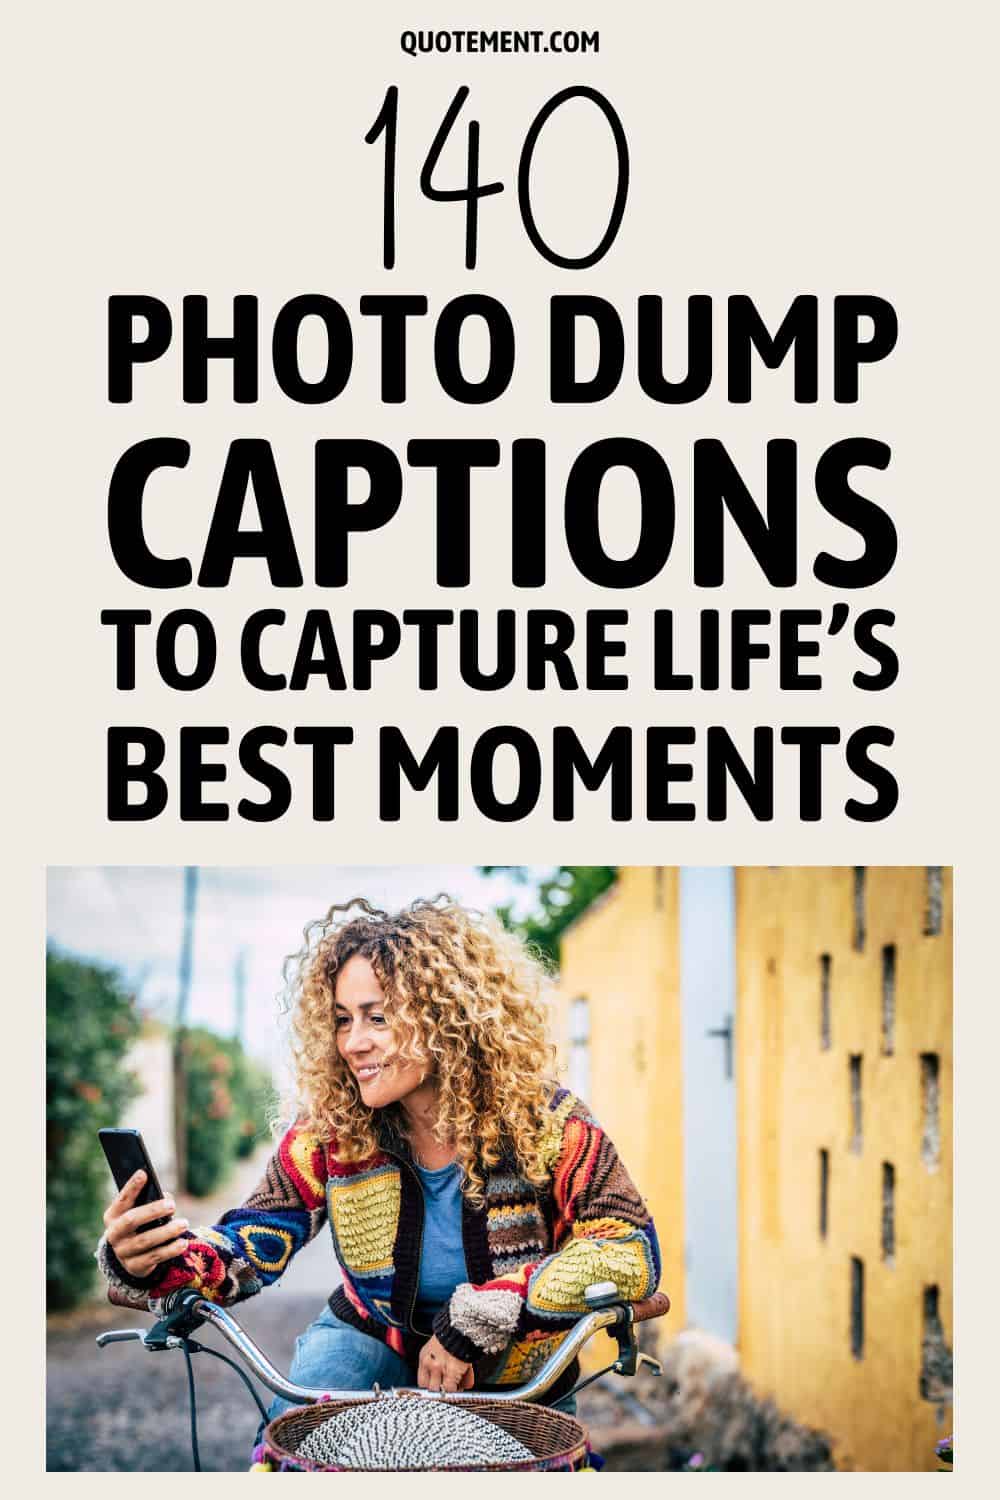 140 Photo Dump Captions To Capture Life’s Best Moments
